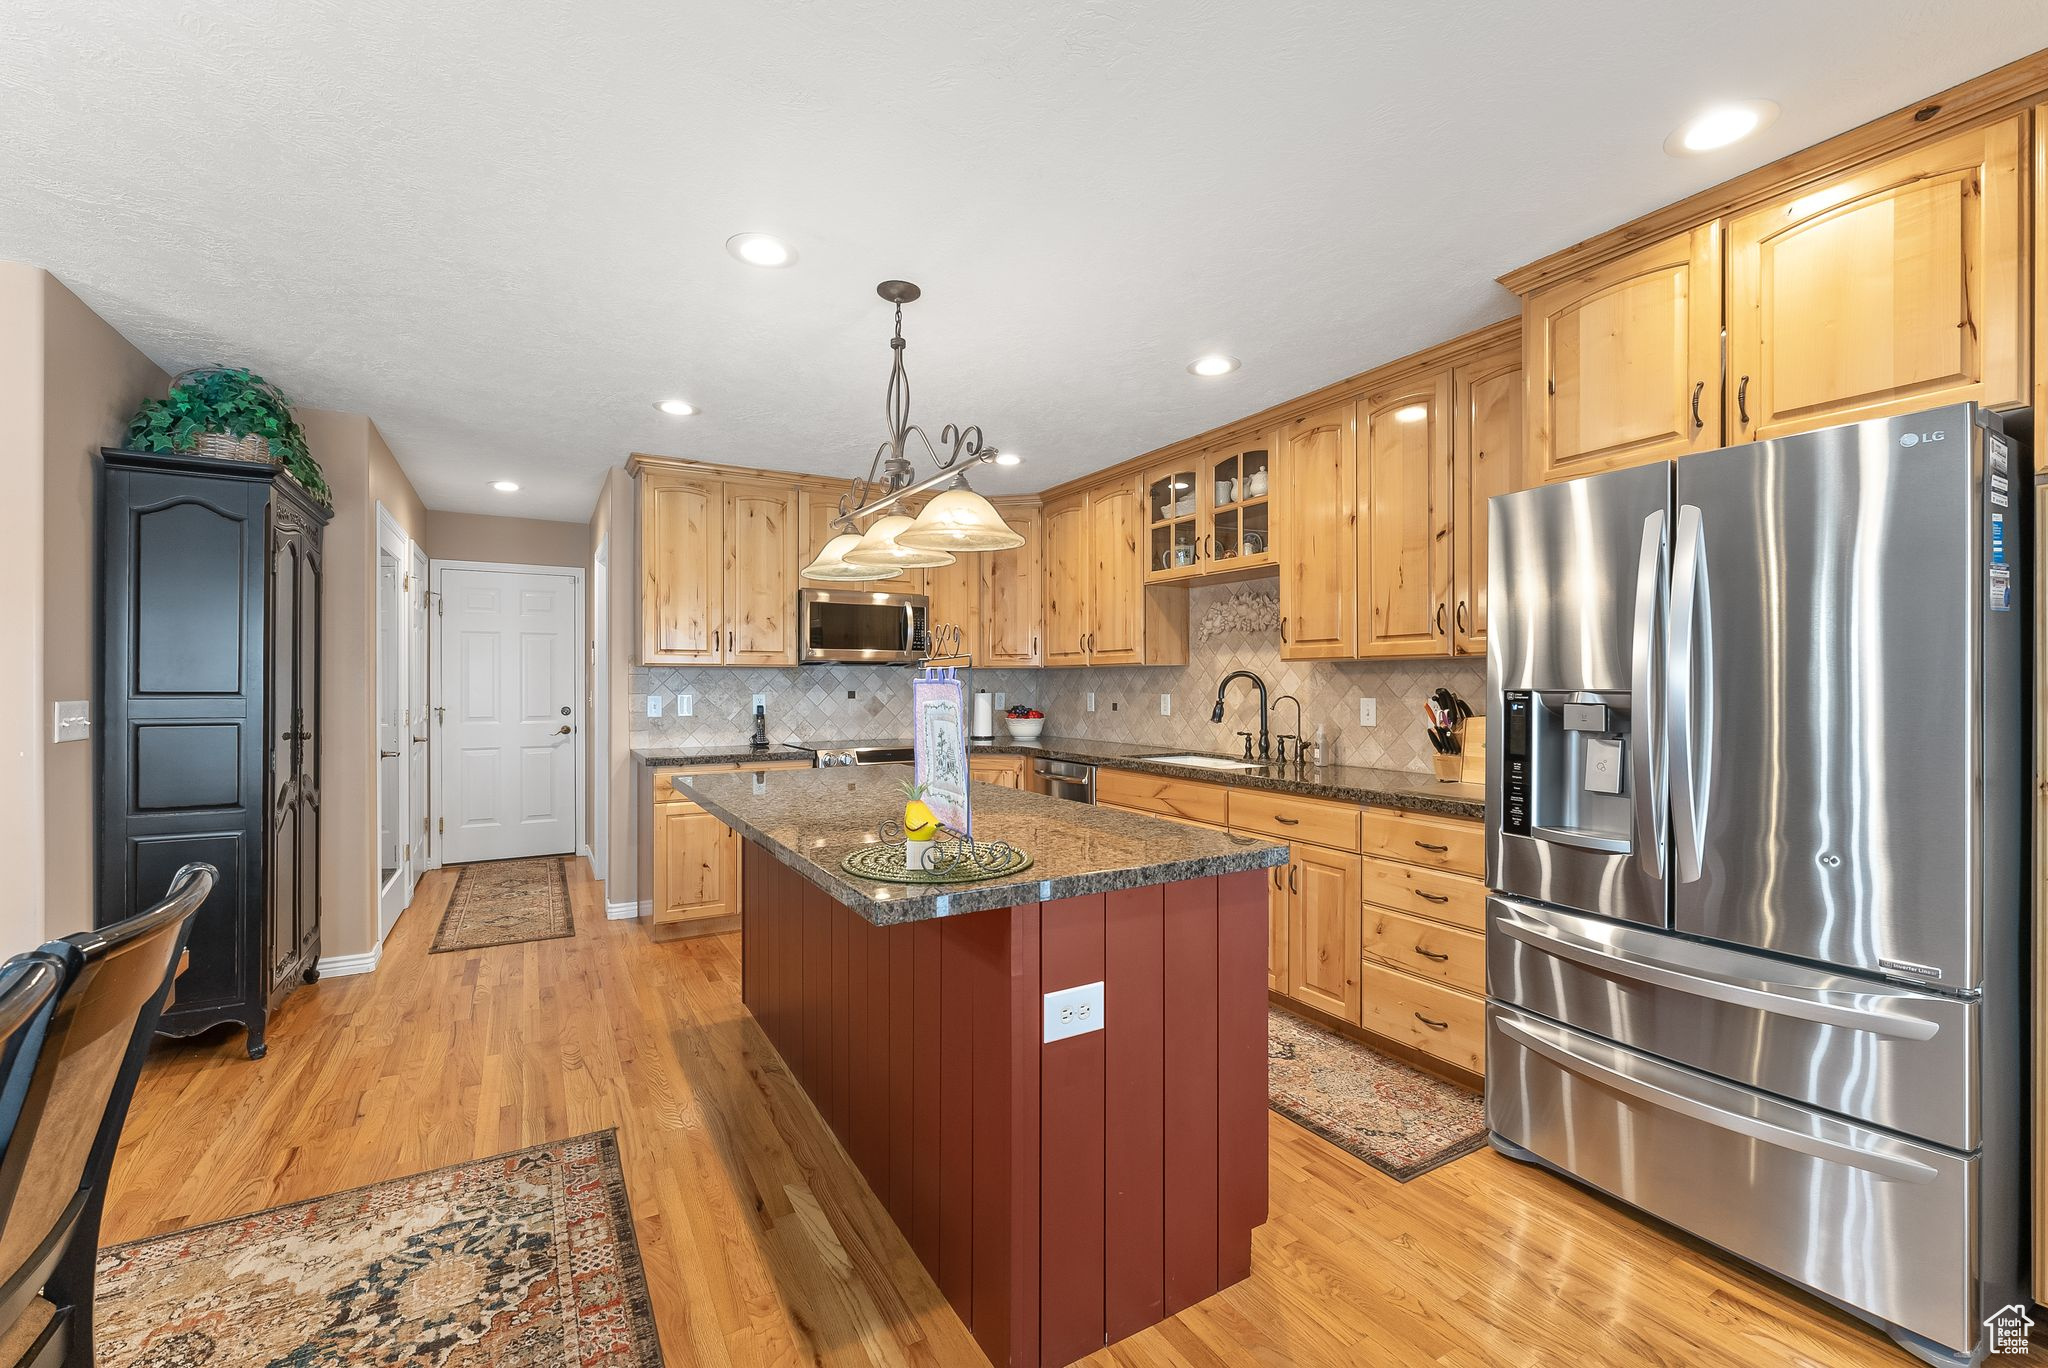 Kitchen with a kitchen island, stainless steel appliances, light wood-type flooring, pendant lighting, and backsplash